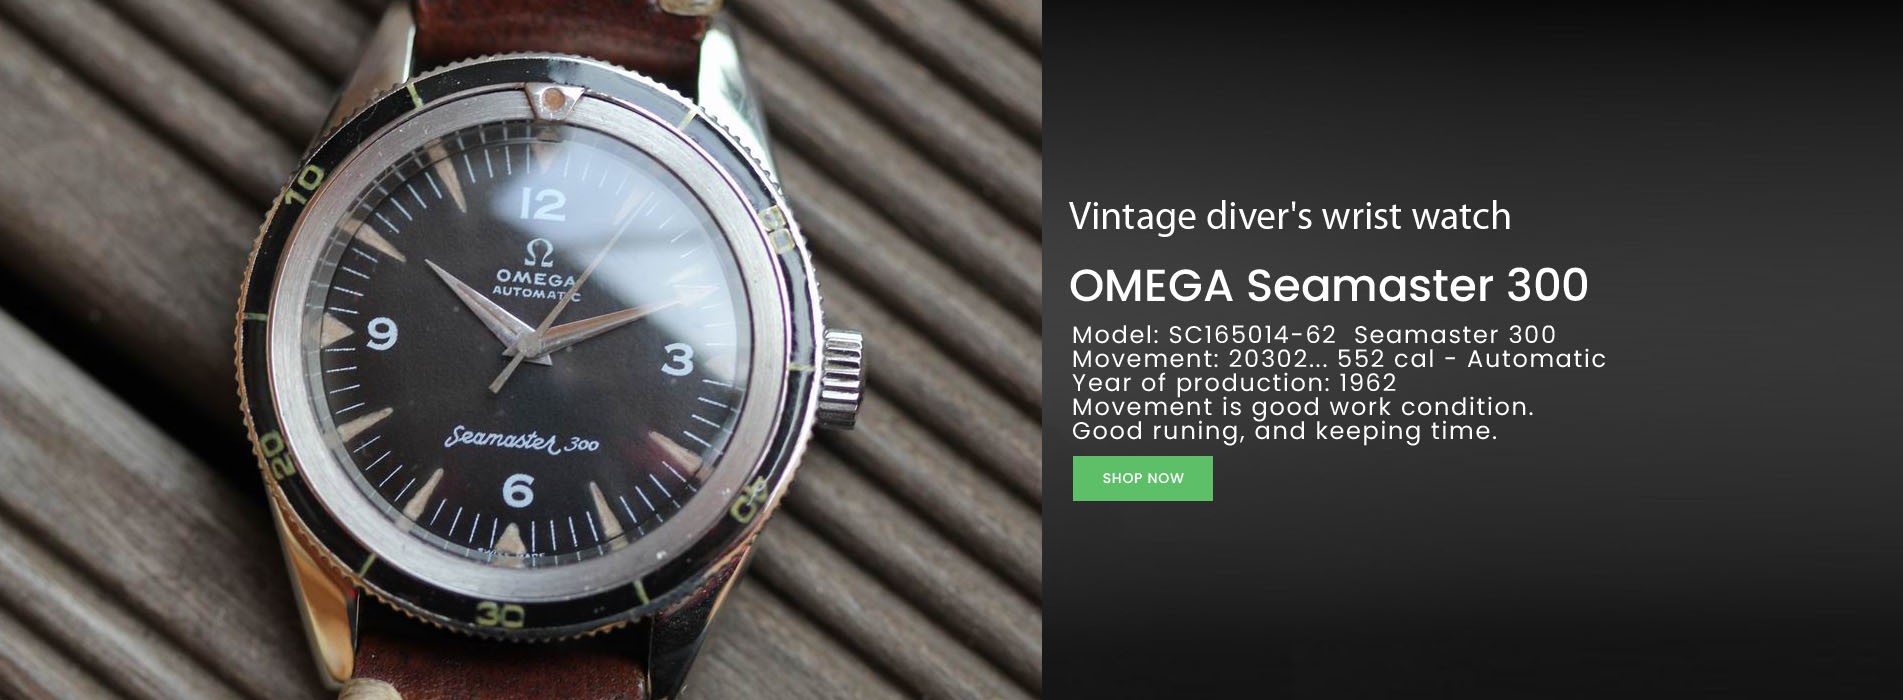 Vintage diver's wrist watch OMEGA Seamaster 300 Ref SC 165014-62